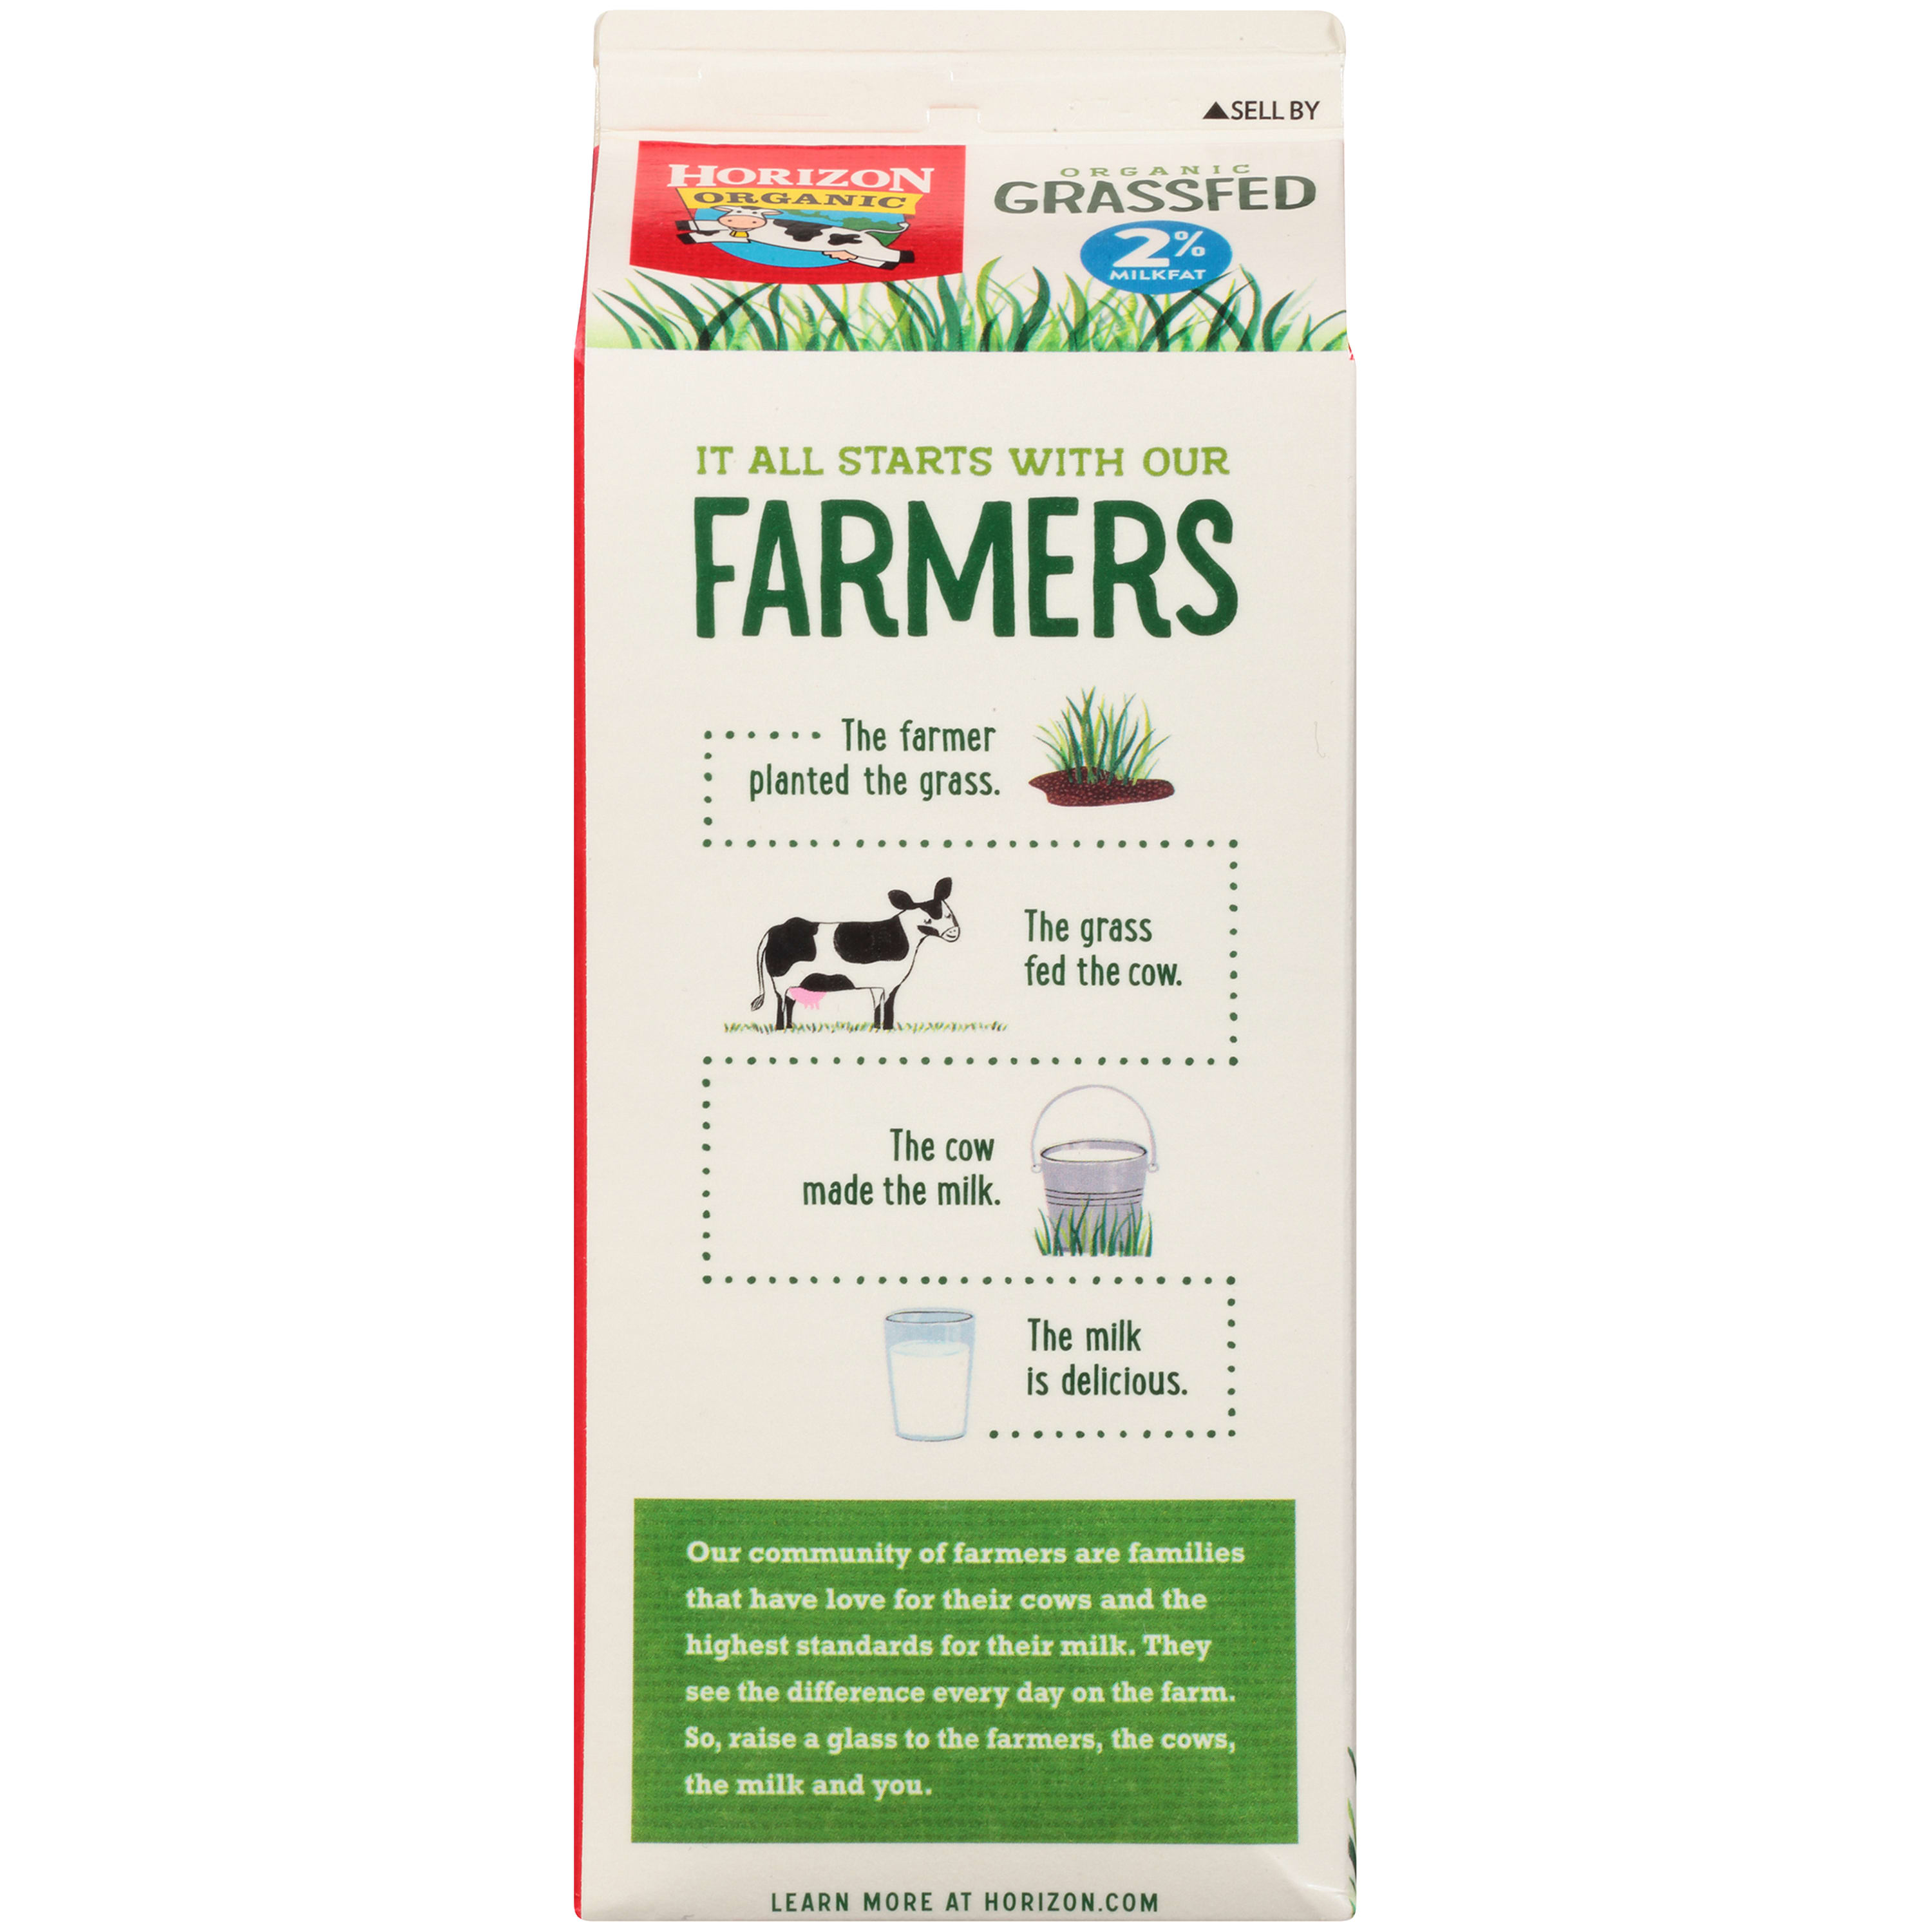 Horizon Organic 2% Reduced Fat Grassfed Milk, Half Gallon - image 3 of 10